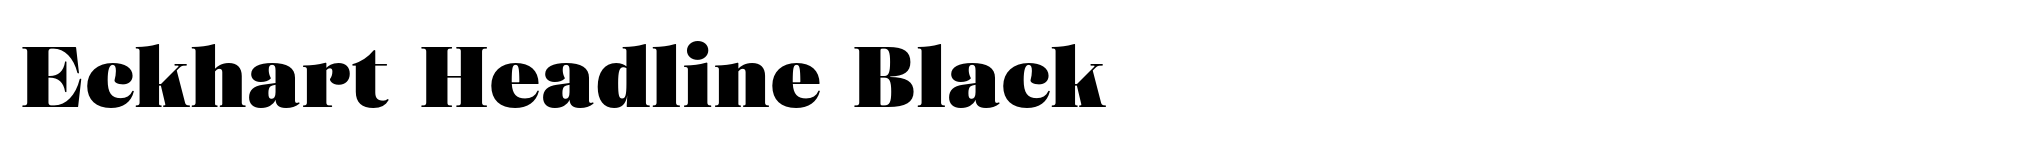 Eckhart Headline Black image